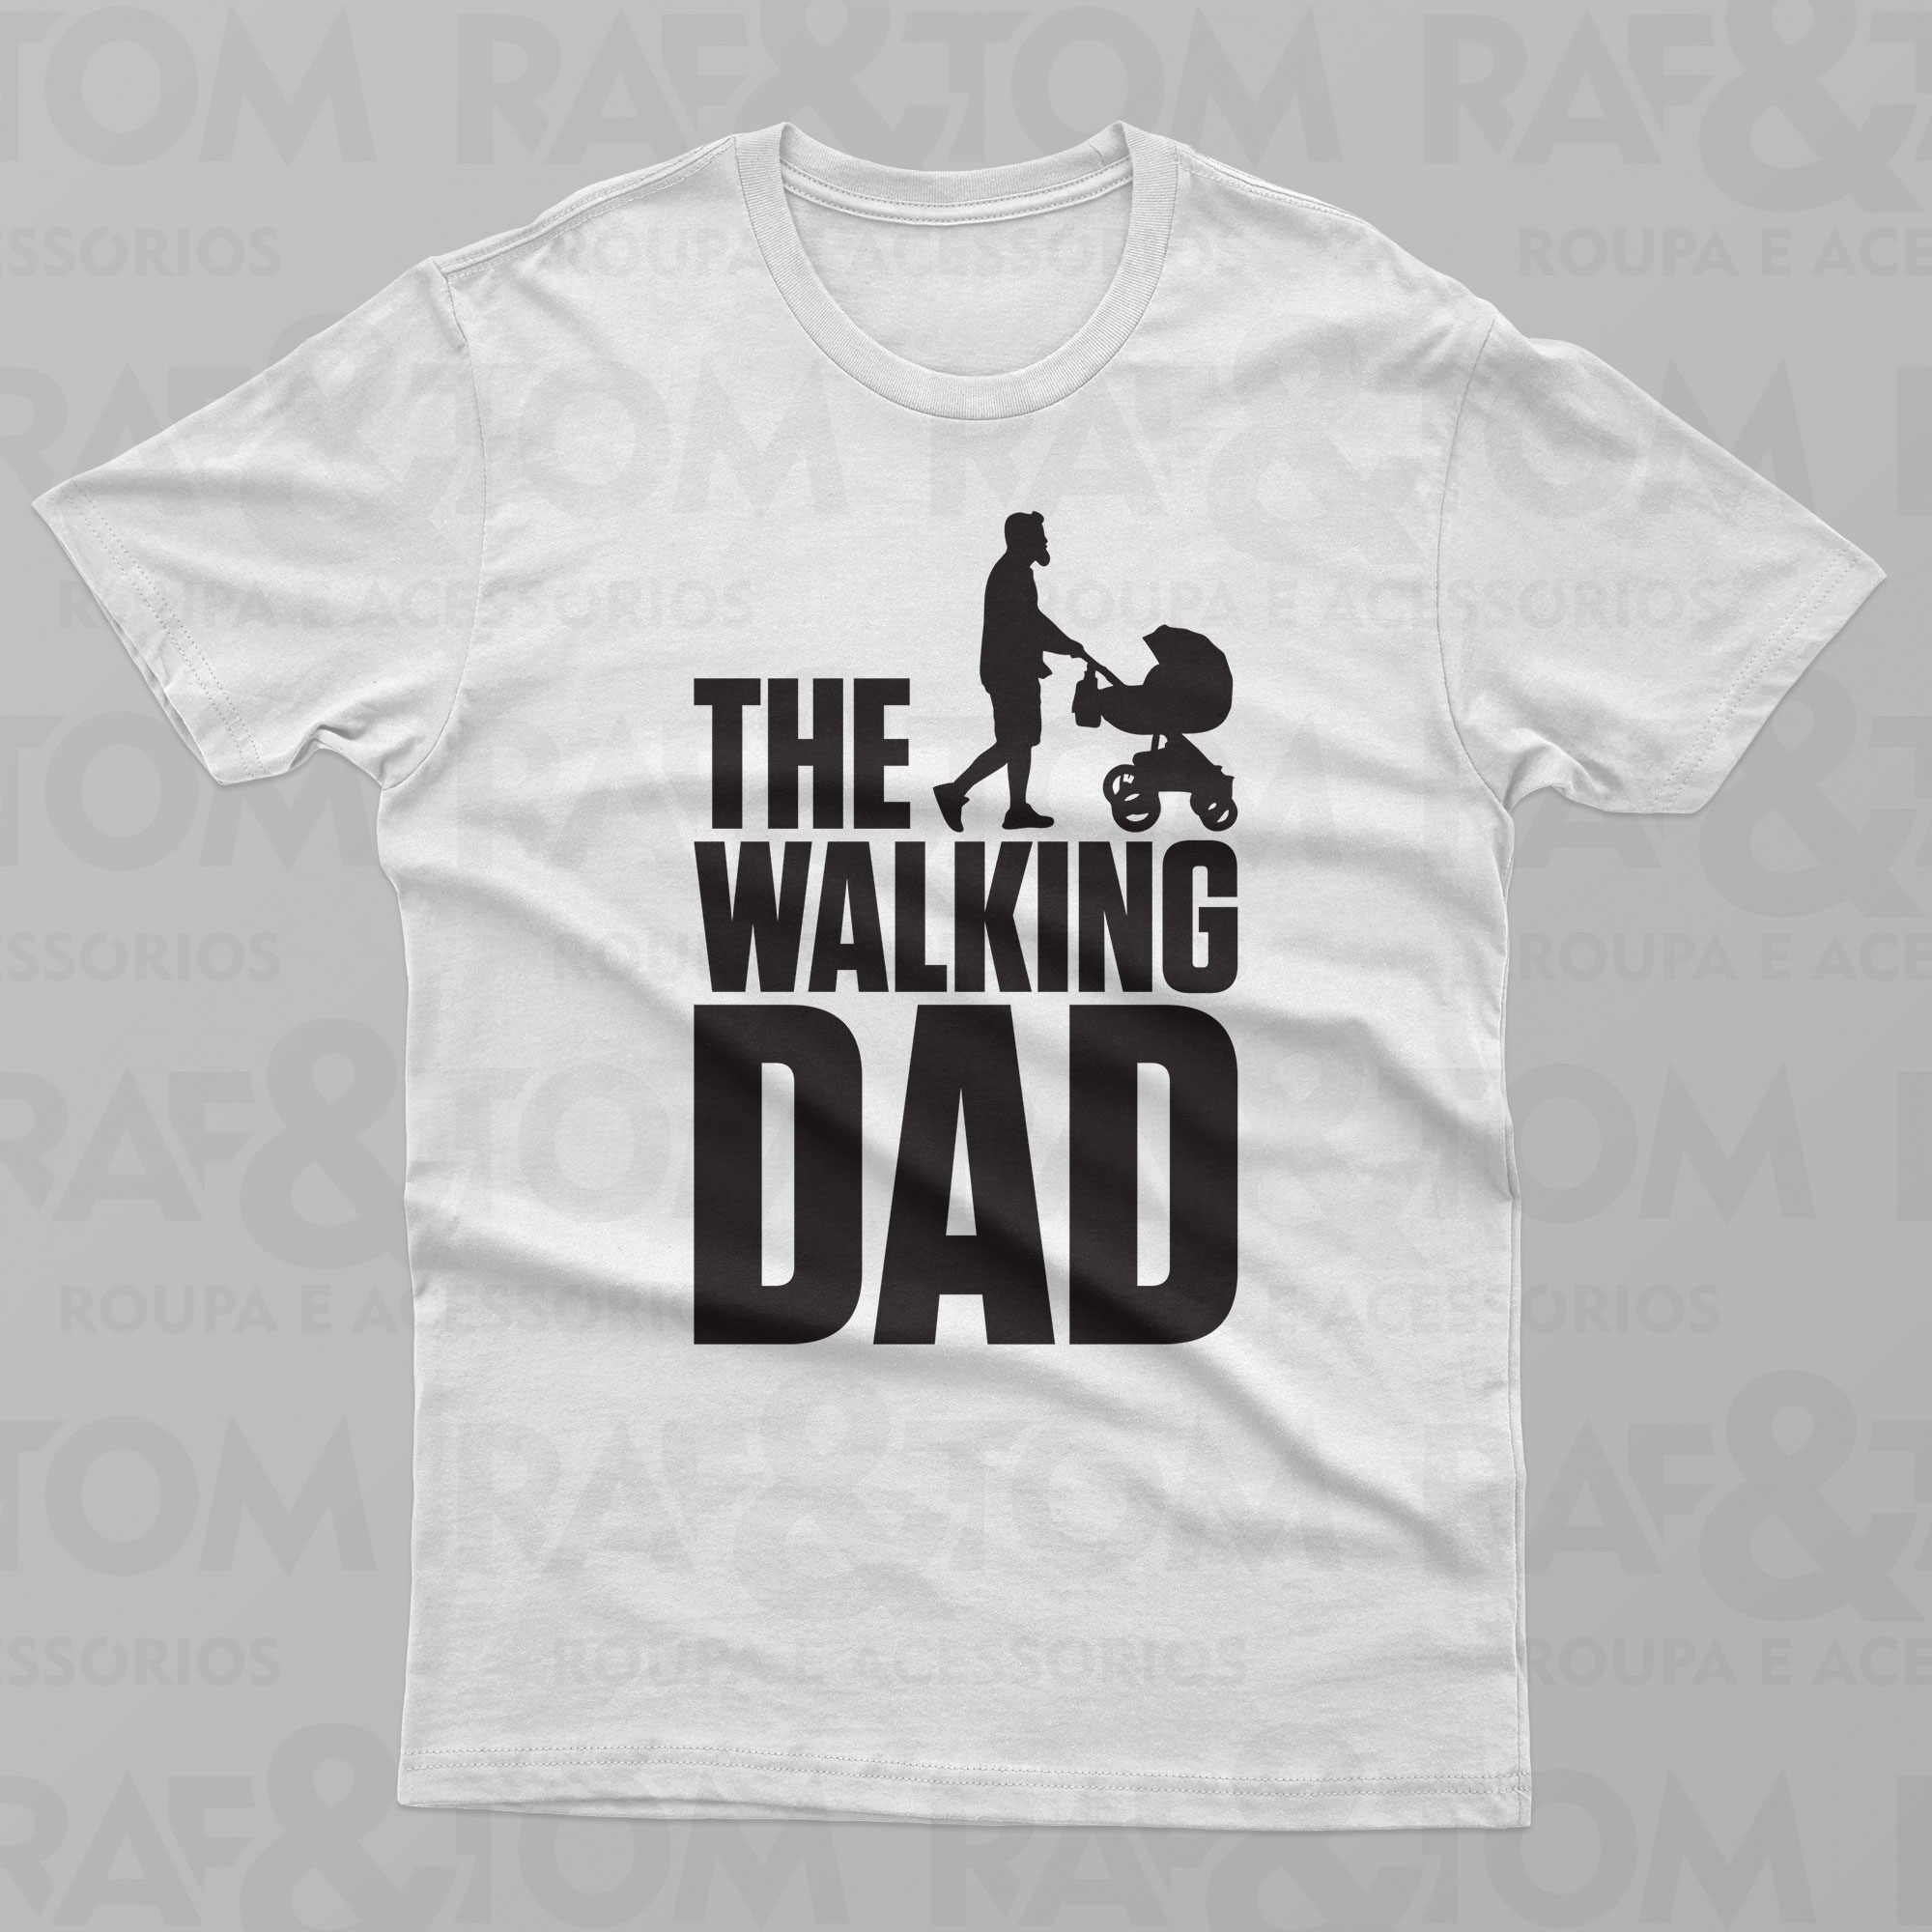 The Walking Dad v2